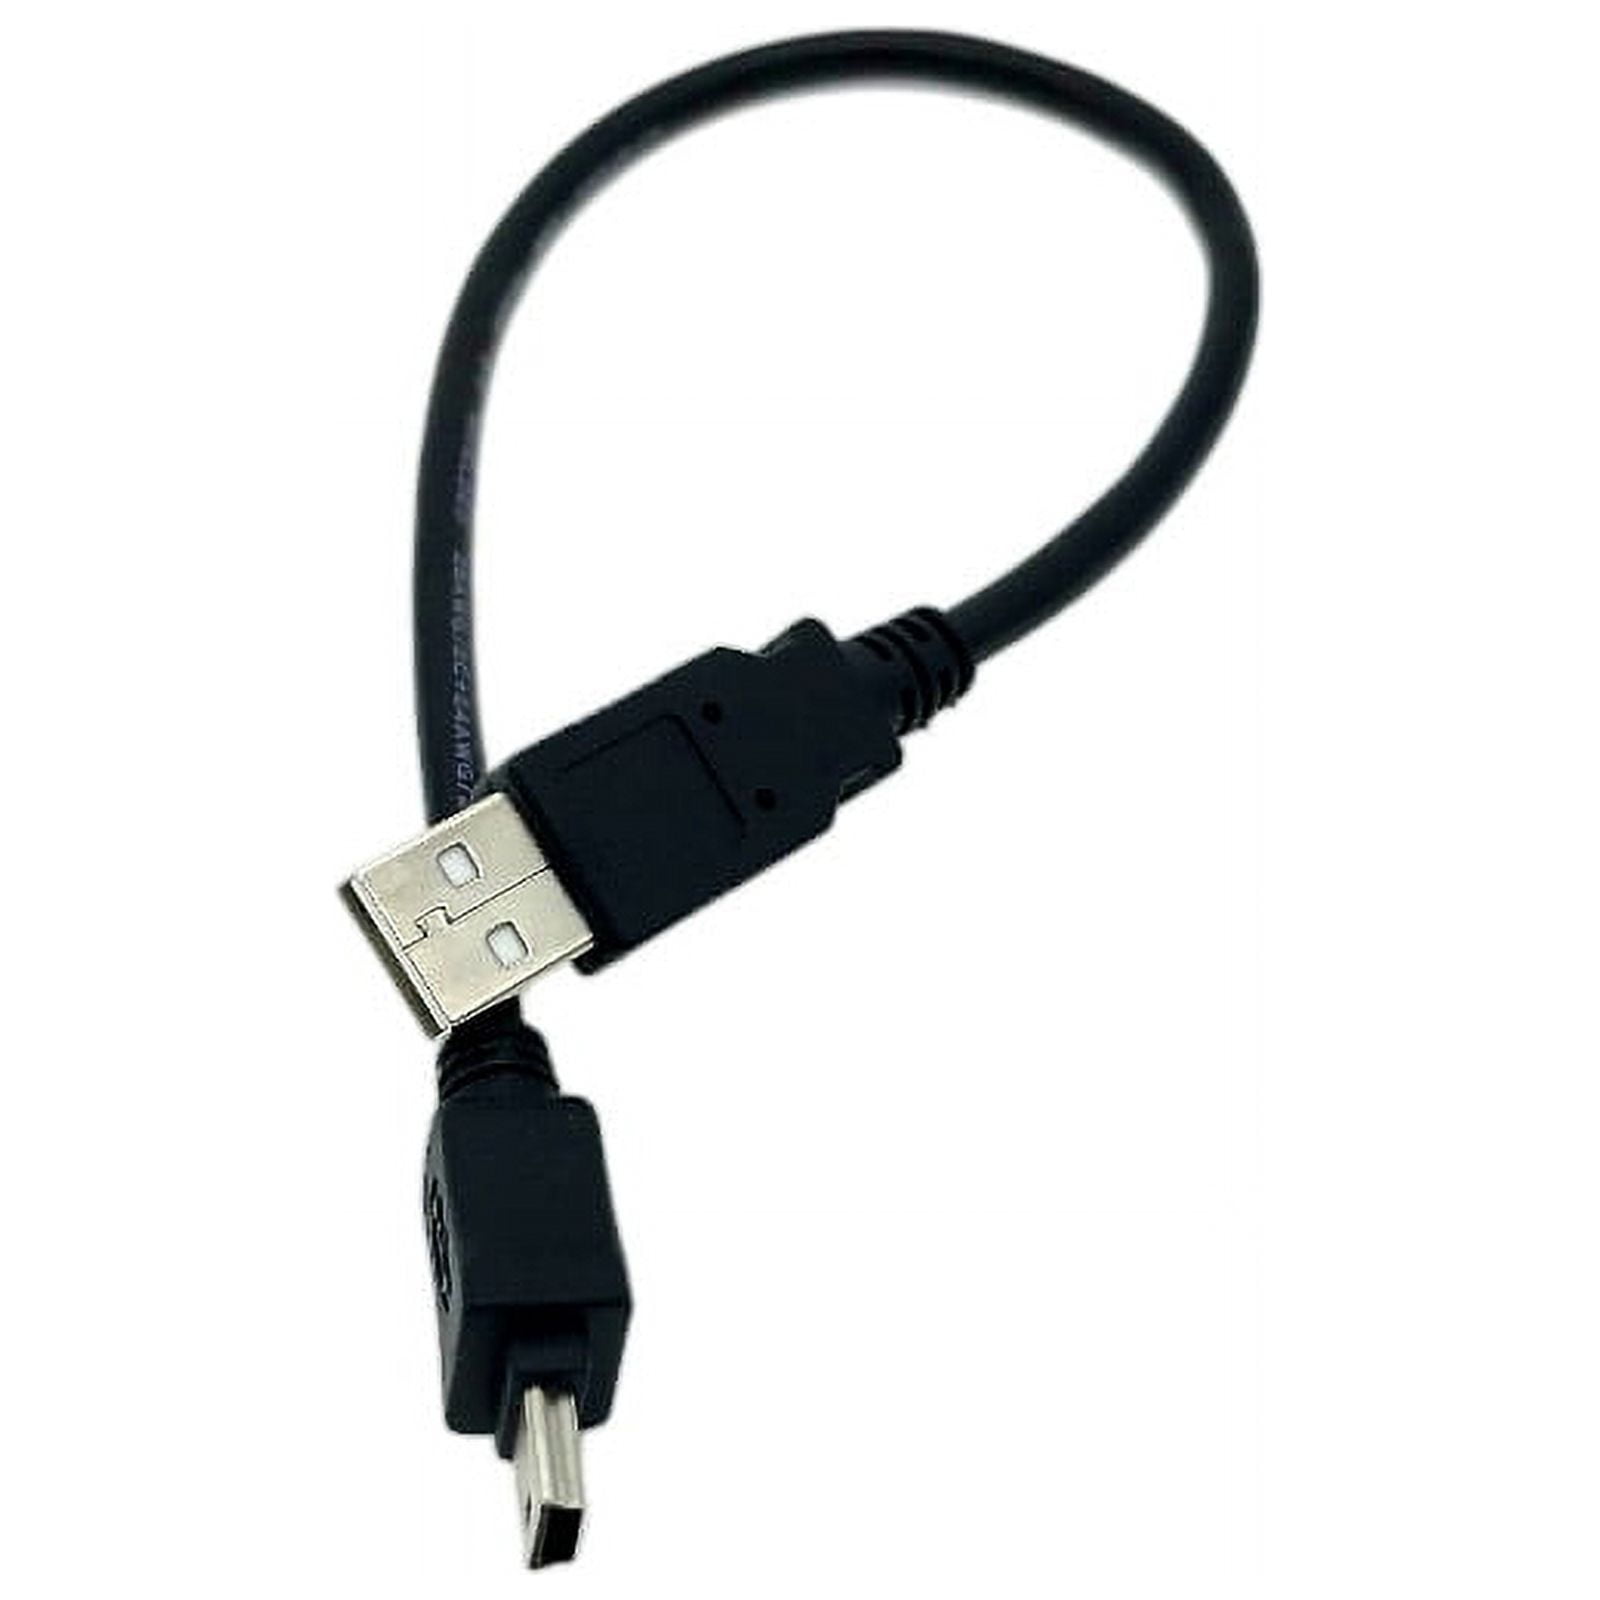 UGREEN Mini USB Cable 3FT,USB Mini Cable Mini USB 2.0 Cable,USB Mini B Cord  Mini USB Charger Cable Compatible with Garmin Nuvi GPS,SatNav,Dash  Cam,Camera,PS3 Controller,Hard Drive,GoPro Hero 3+,PDA 